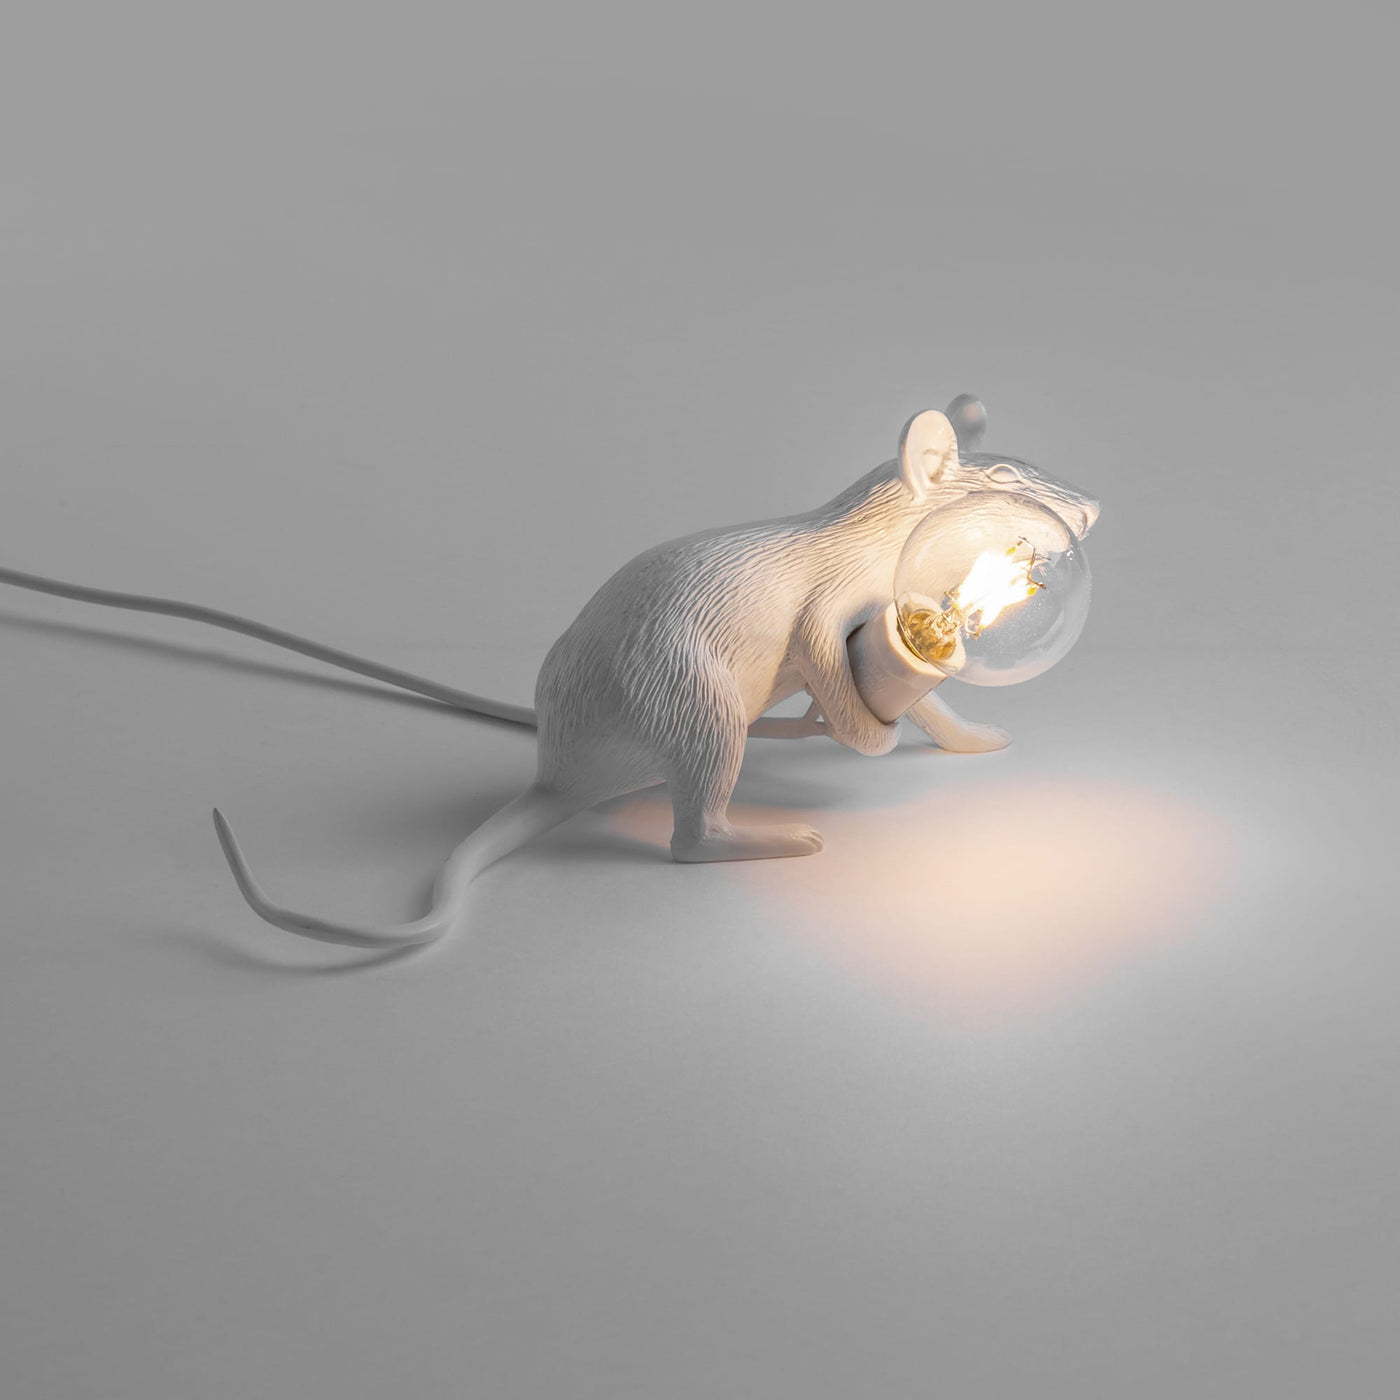 The Mouse Lamp - Lie Down Version